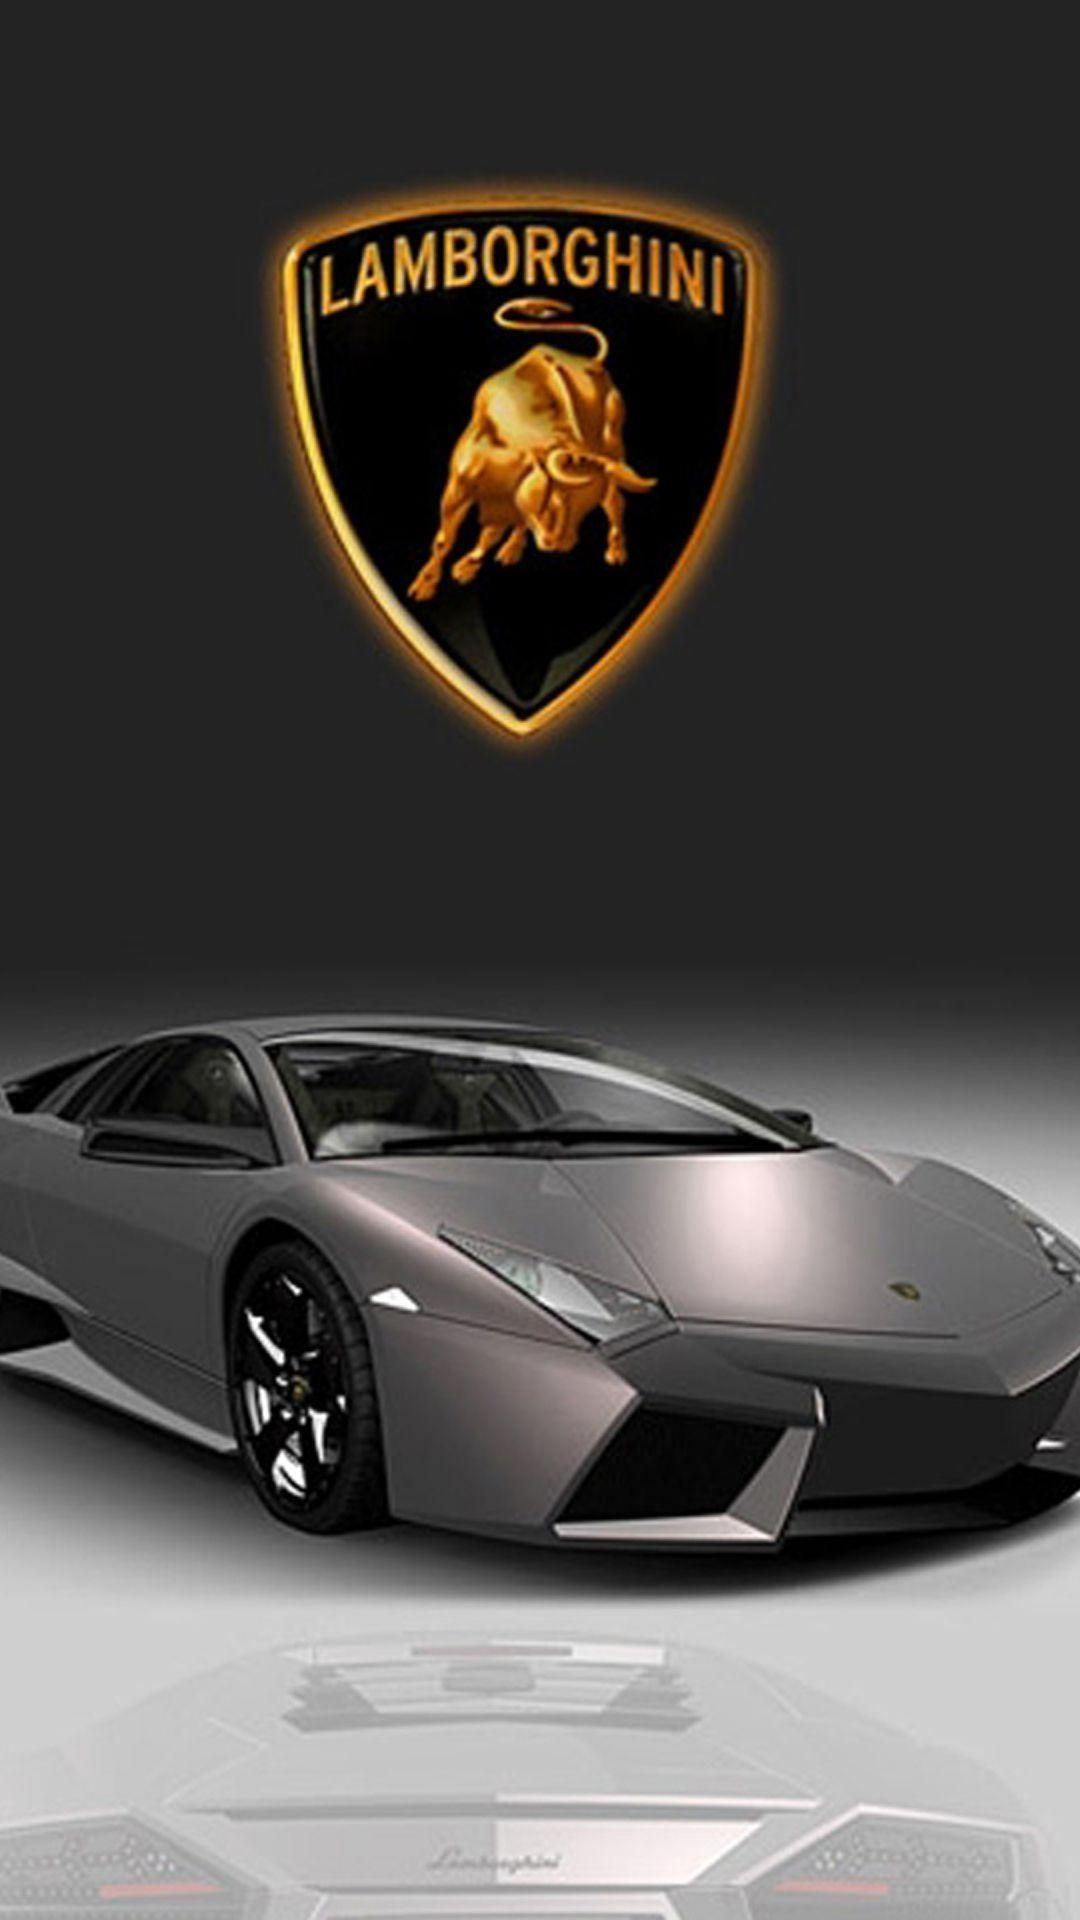 iPhone 6 Plus wallpaper, Lamborghini logo, Fast car appeal, High-speed luxury, 1080x1920 Full HD Phone